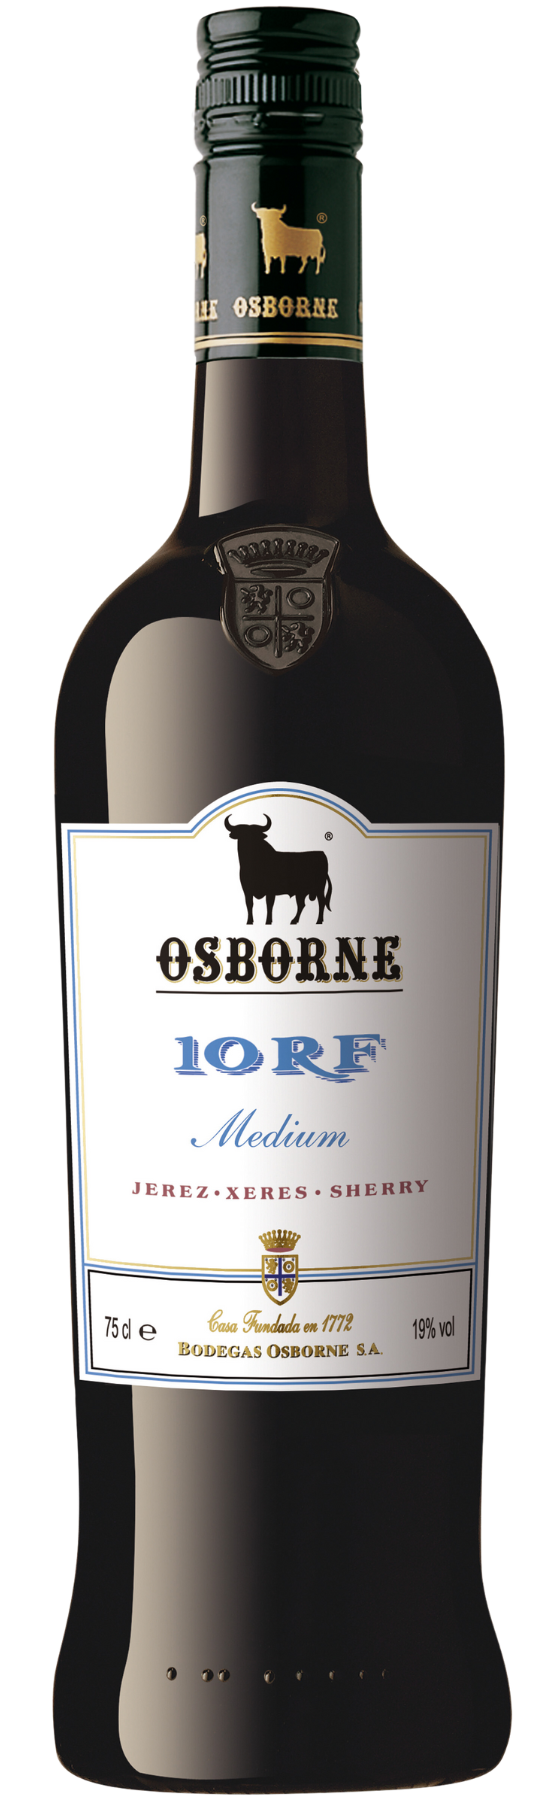 Osborne Sherry 10 RF Oloroso Medium